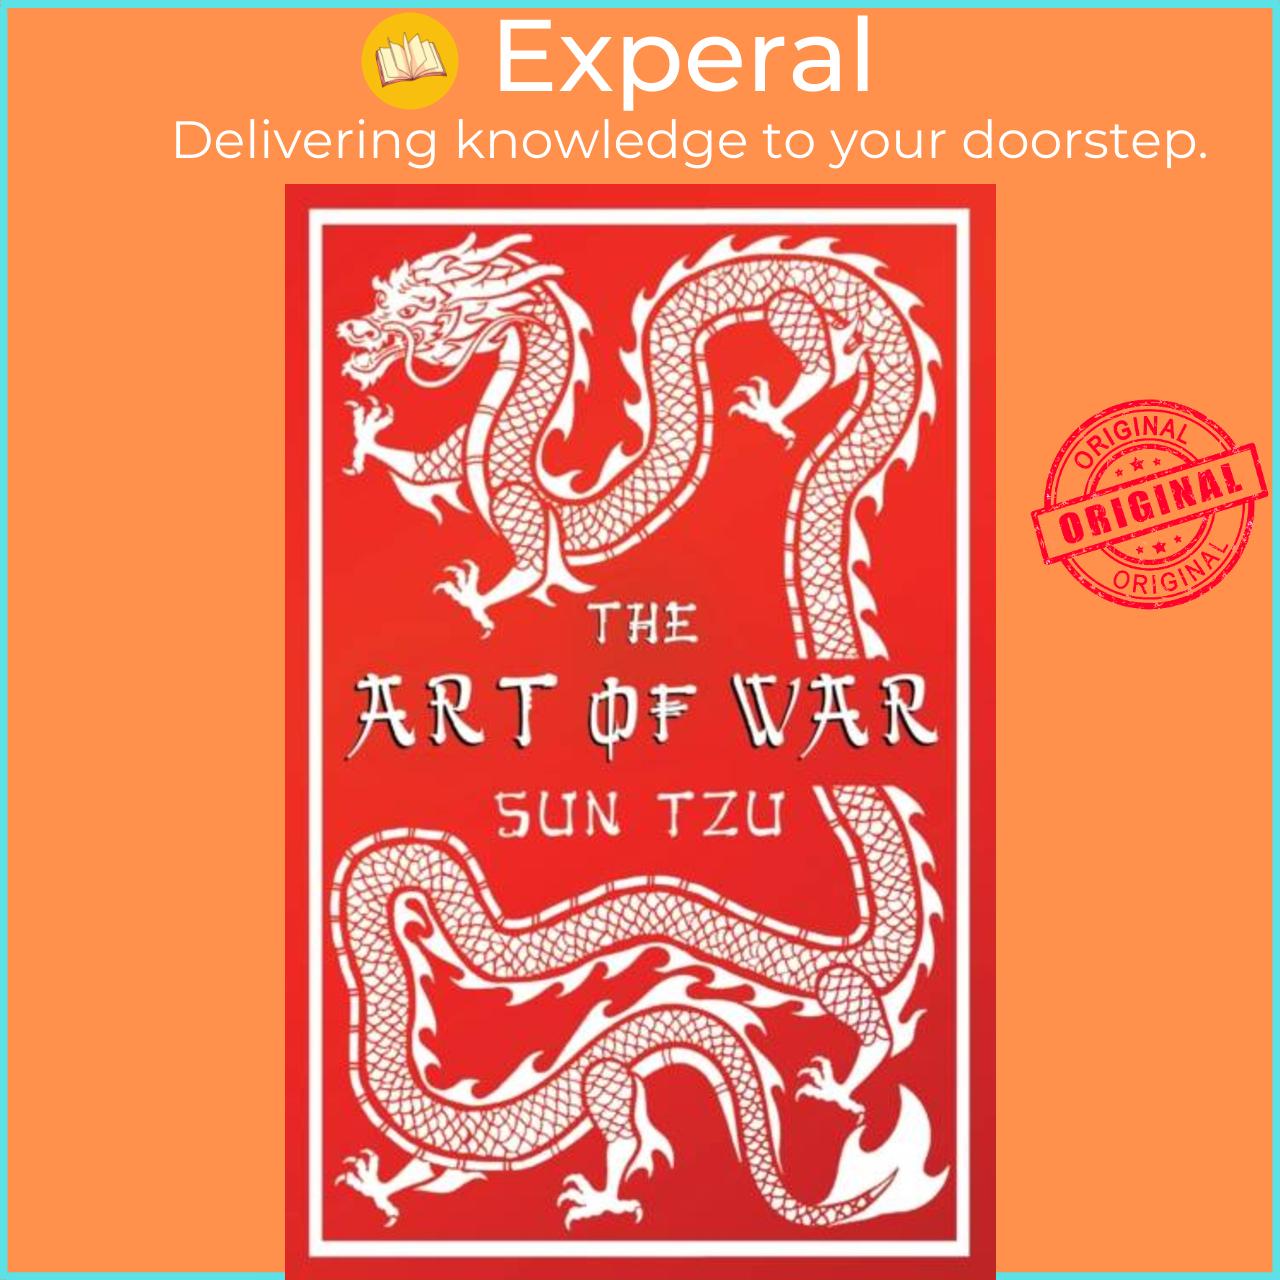 Sách - The Art of War by Sun Tzu (UK edition, paperback)